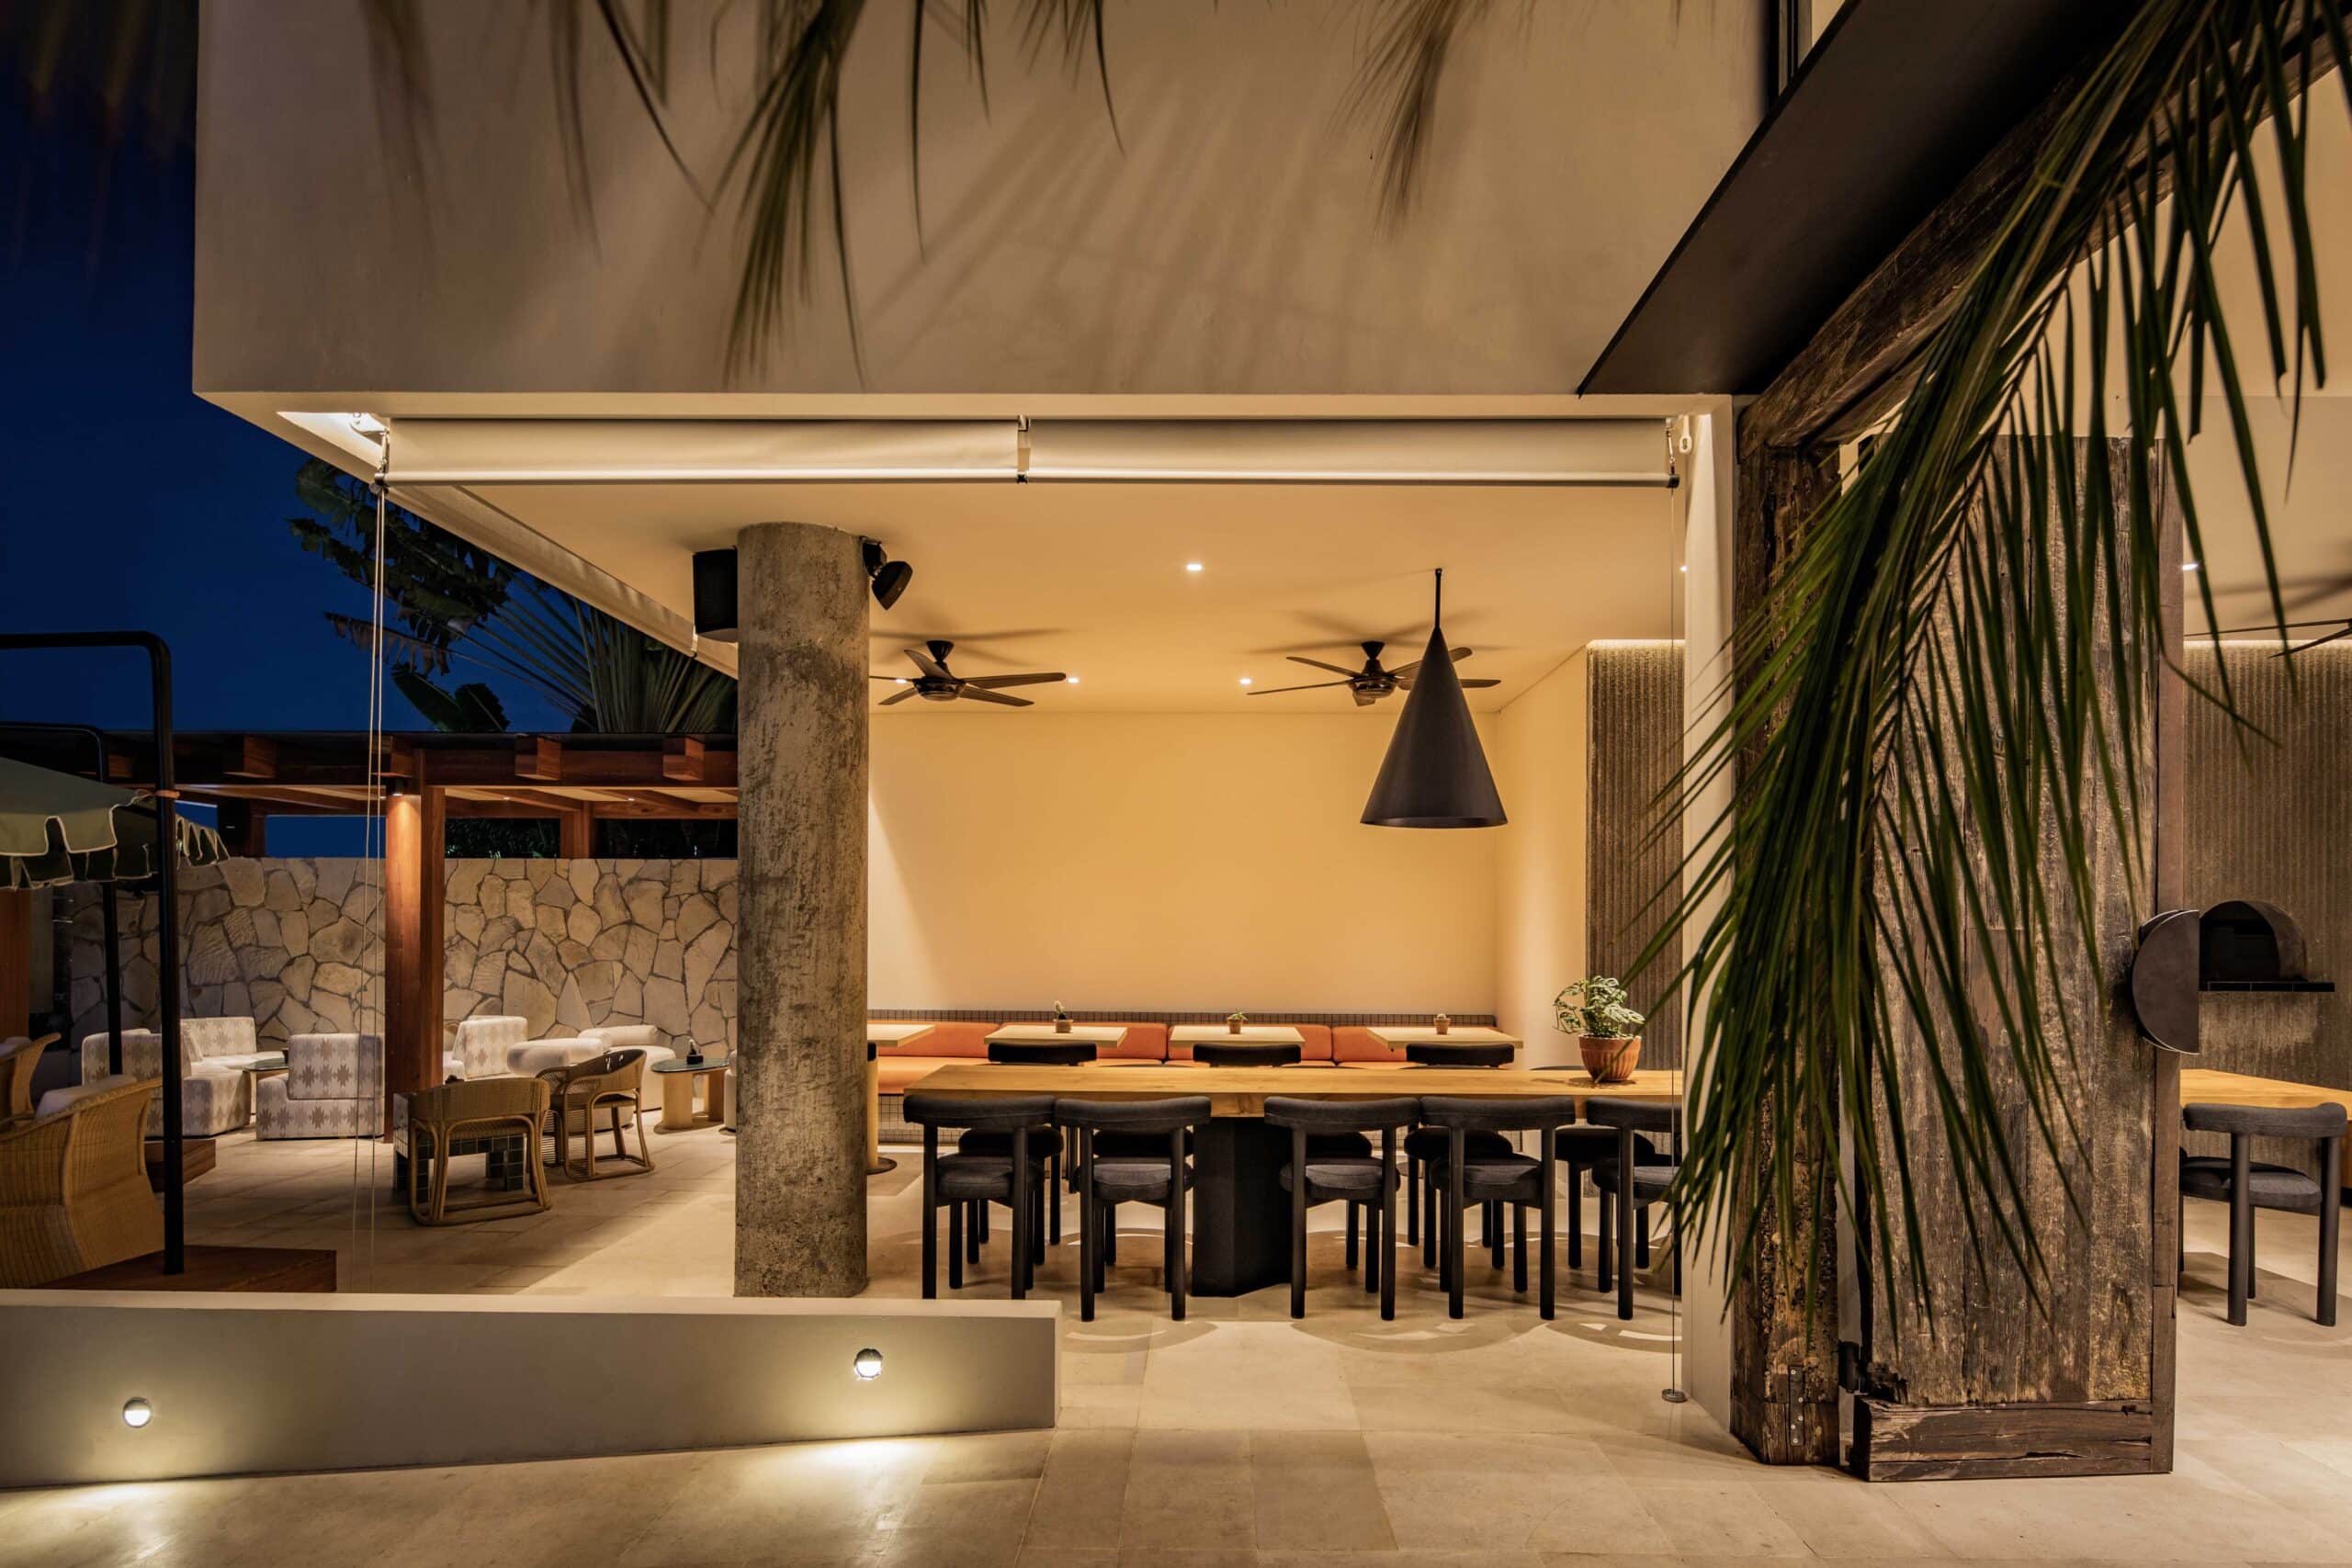 Restaurant Design - Luma Bali - Interior Design - Architecture - Architect Bali - Dining Area